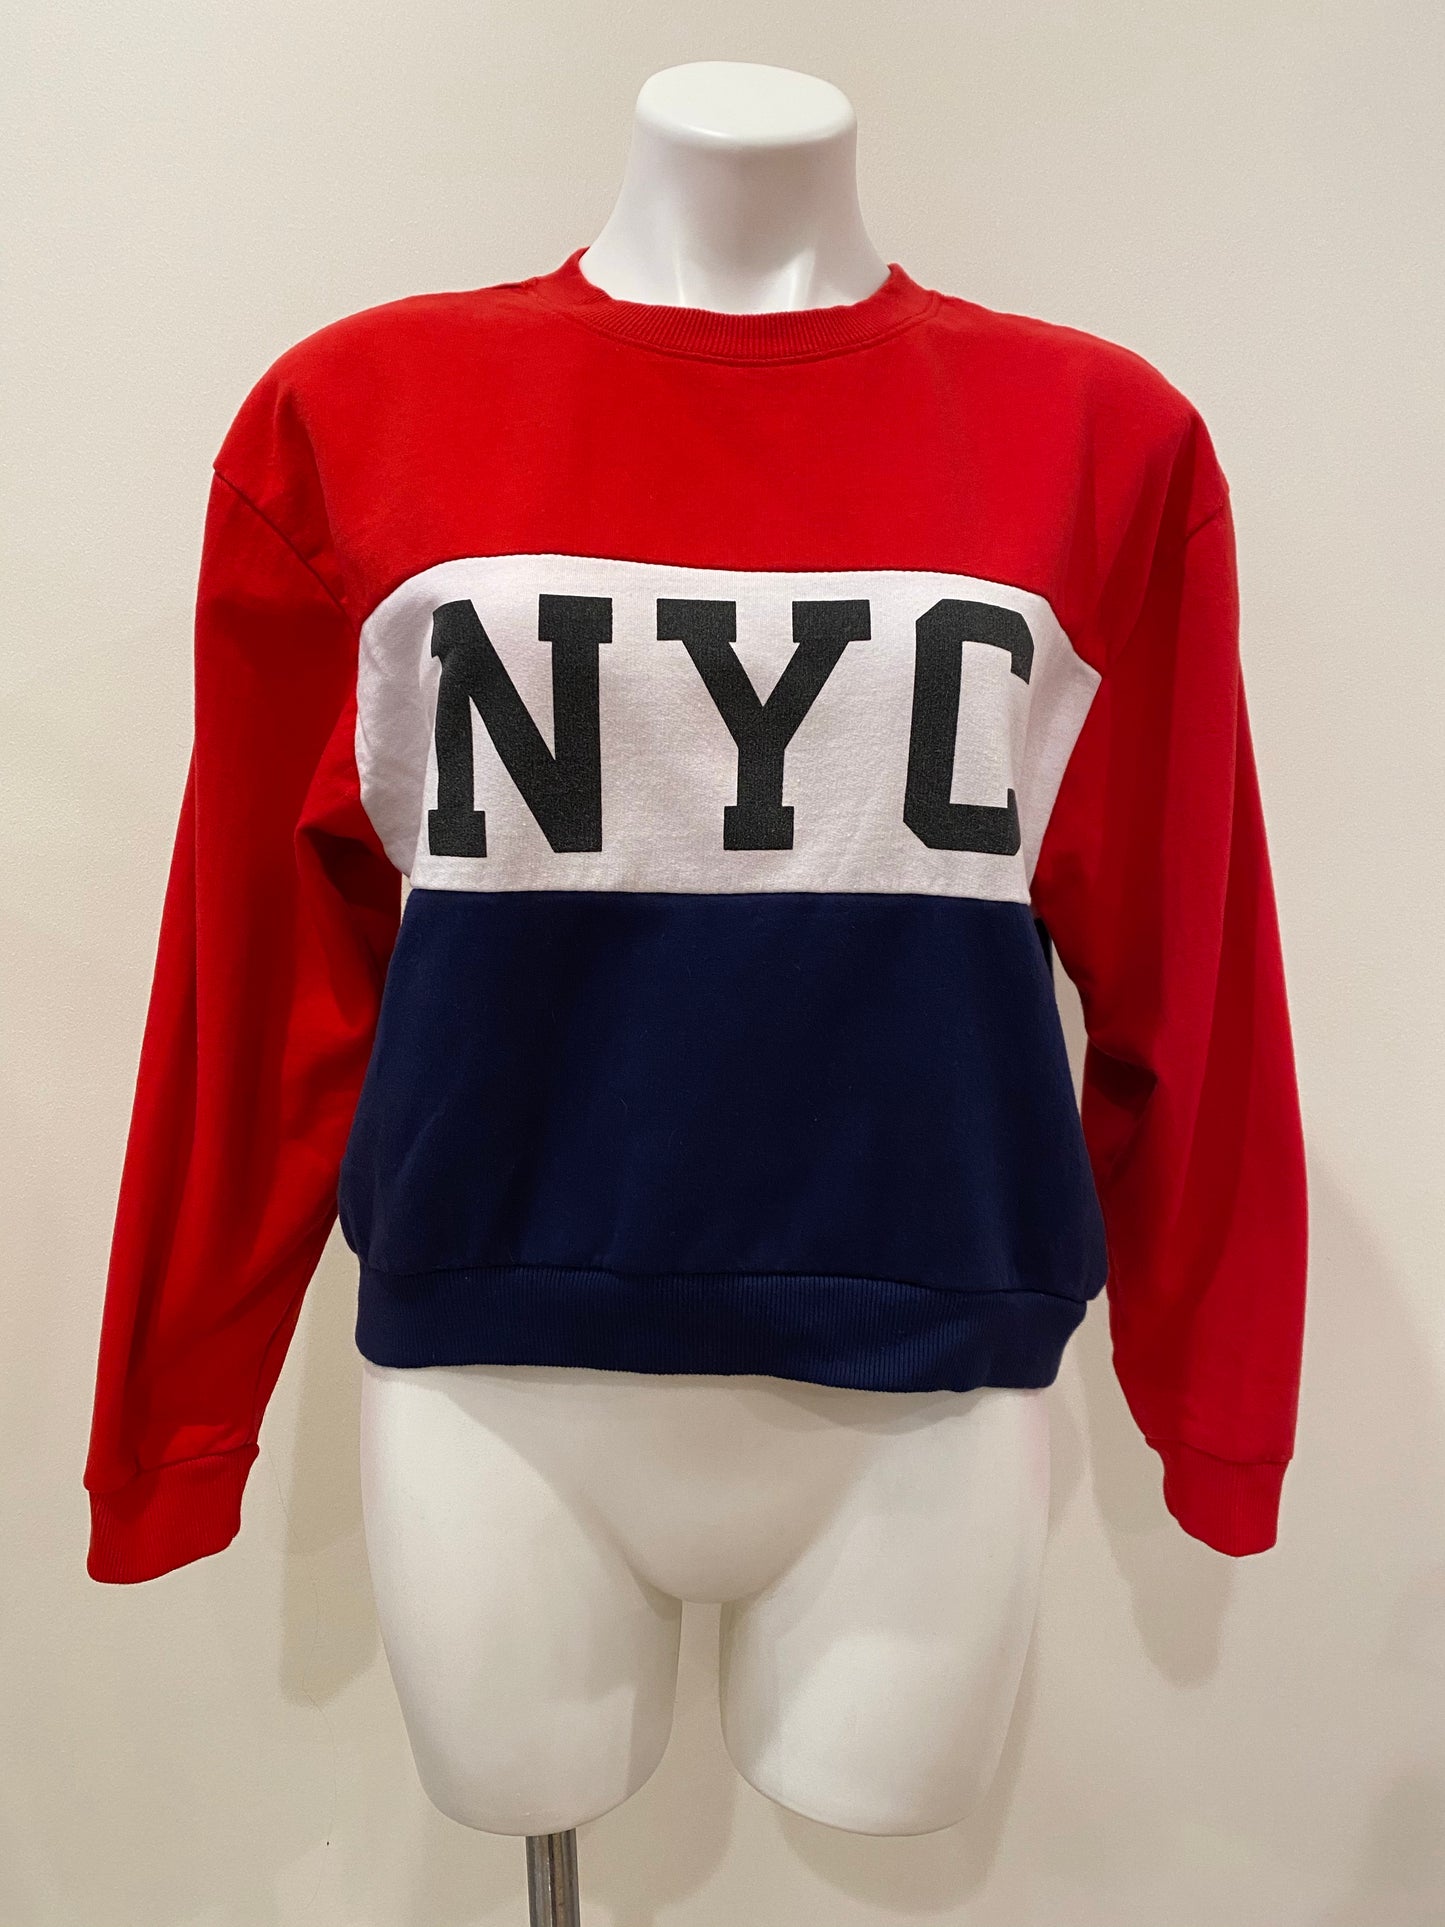 NYC Sweatshirt, 1980’s